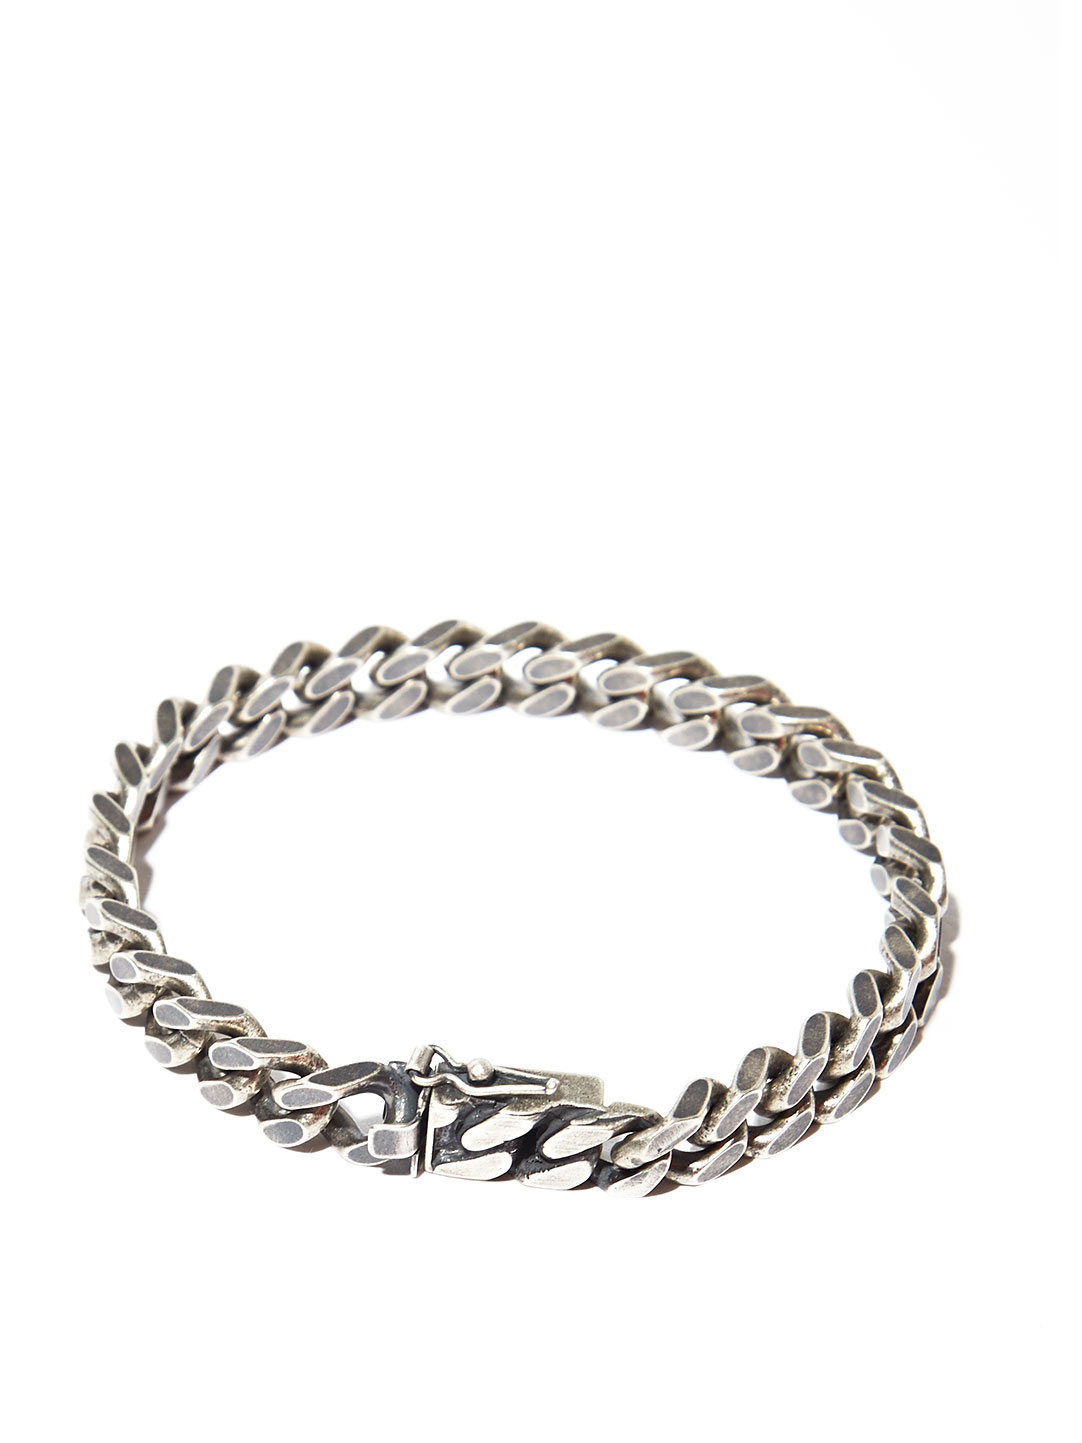 Saint Laurent Mens Silver Chain Bracelet in Metallic for Men - Lyst